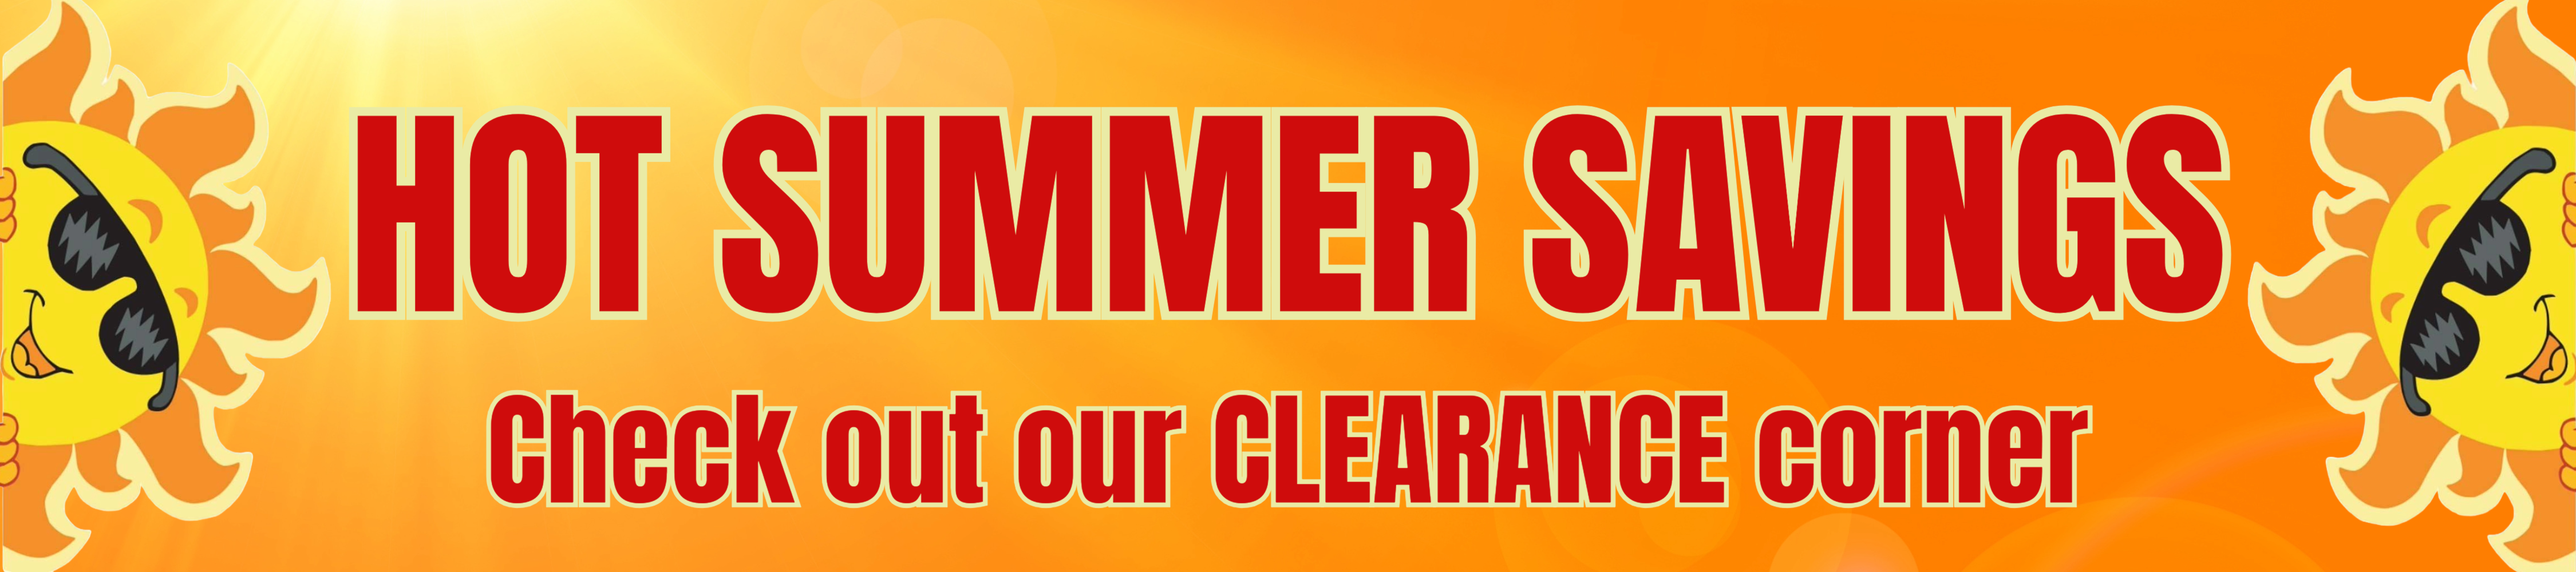 Hot Summer Savings! Super Hot Savings at Sam's Clearance Corner. 